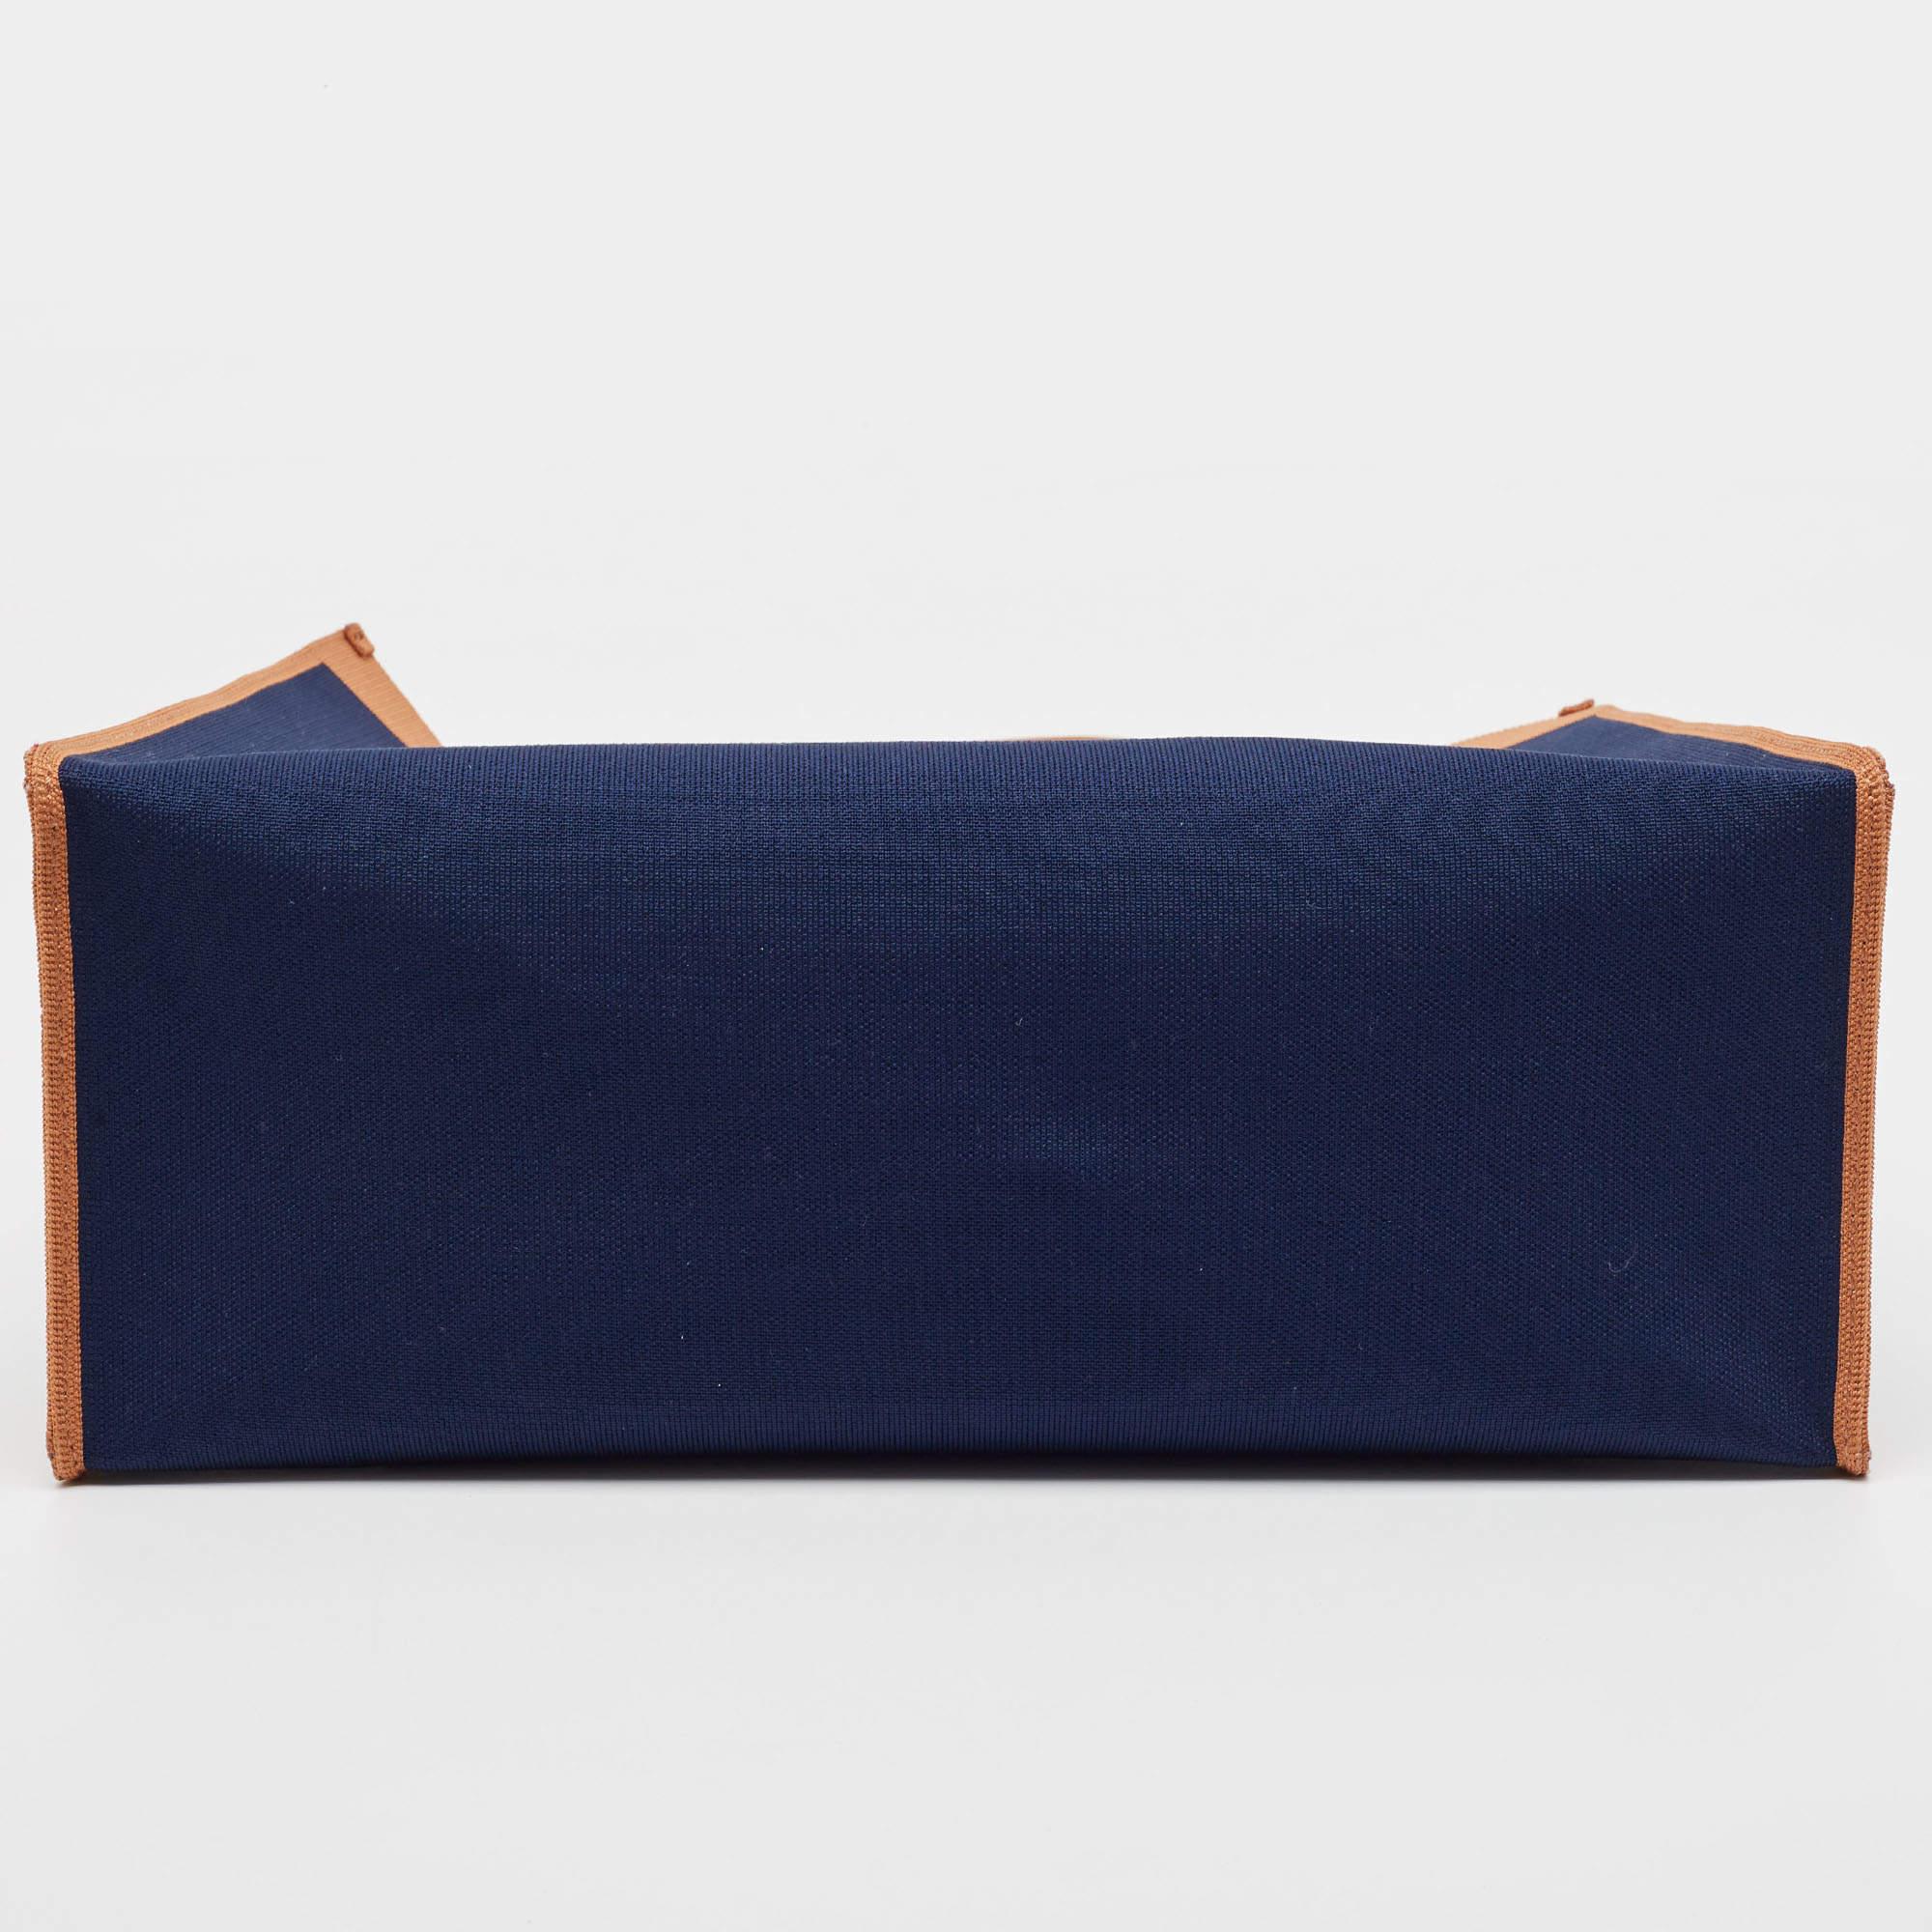 Marni Navy Blue/Brown Knit Fabric Medium Shopper Tote 2